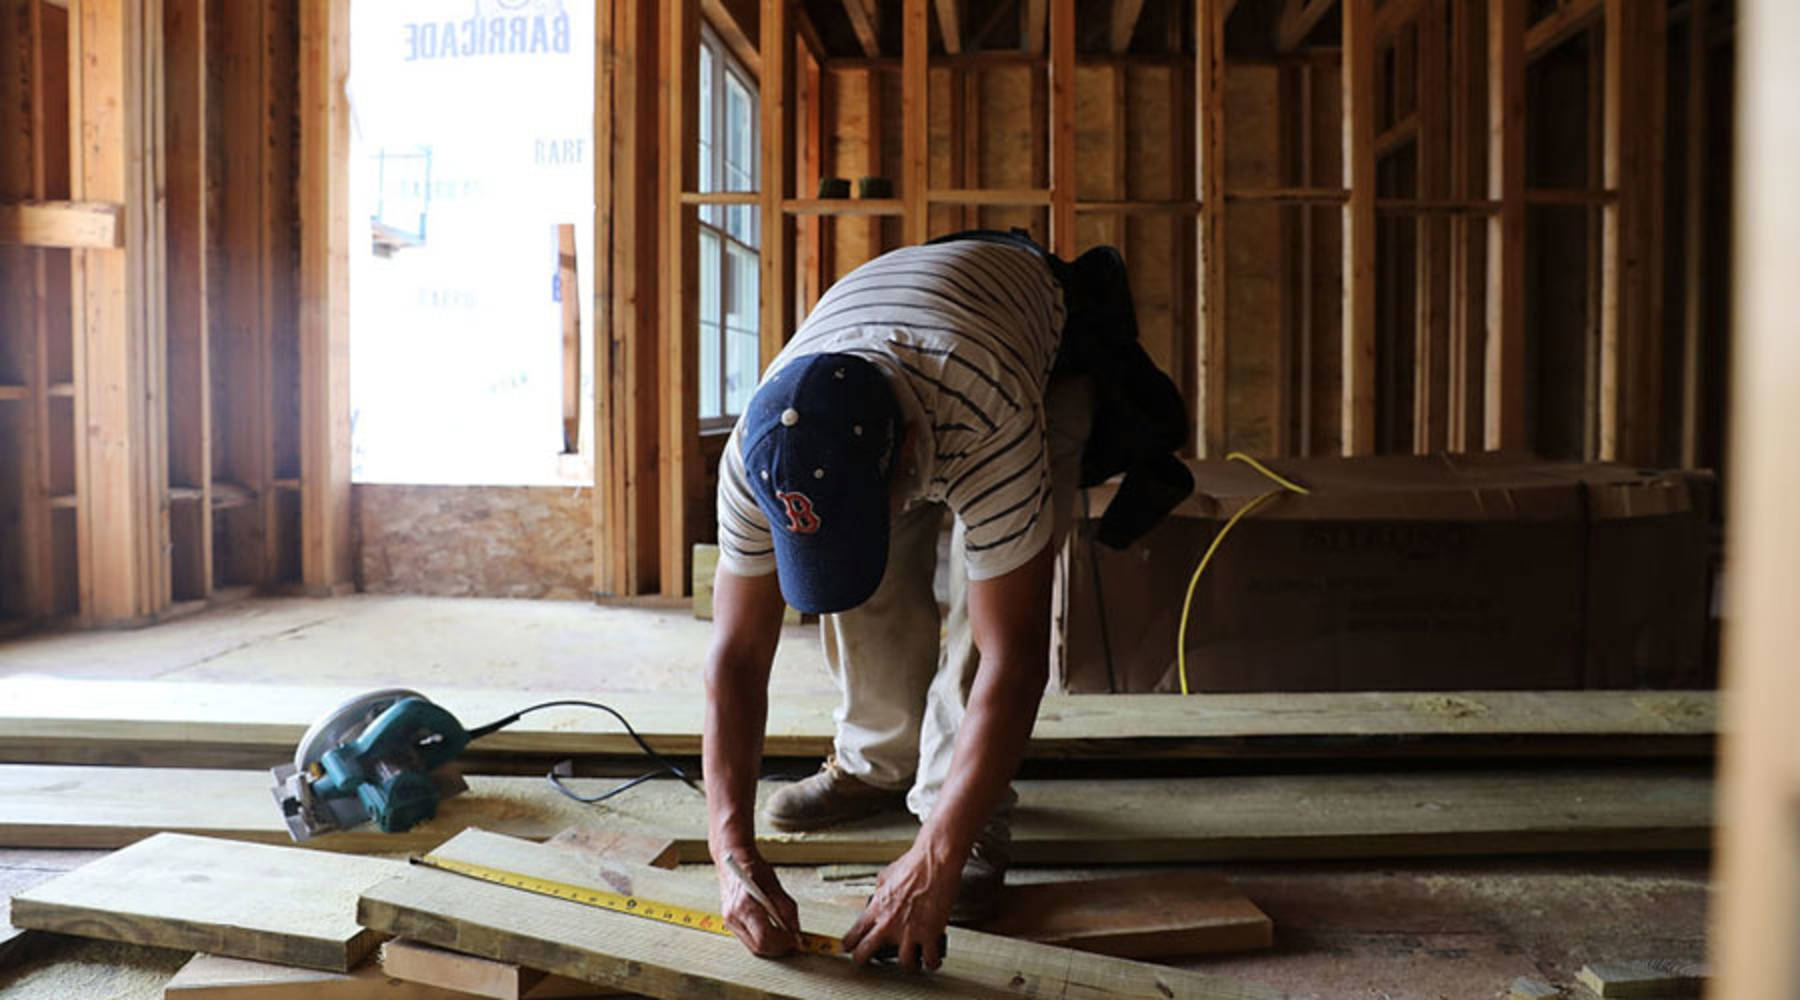 Labor, building material shortages depress U.S. single-family housing  starts